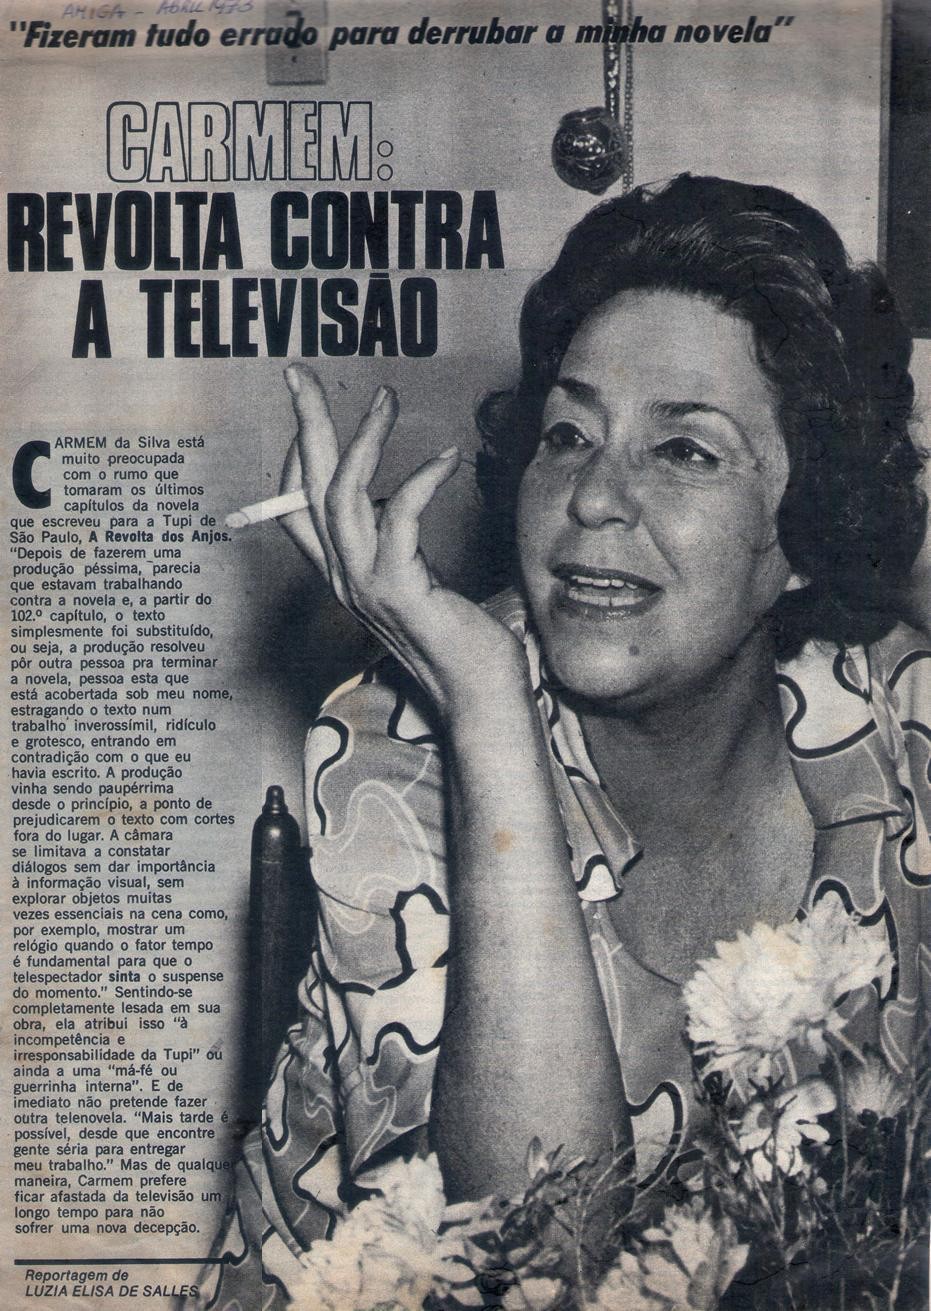 Abril de 1973 - Amiga. Carmem: revolta contra a televis